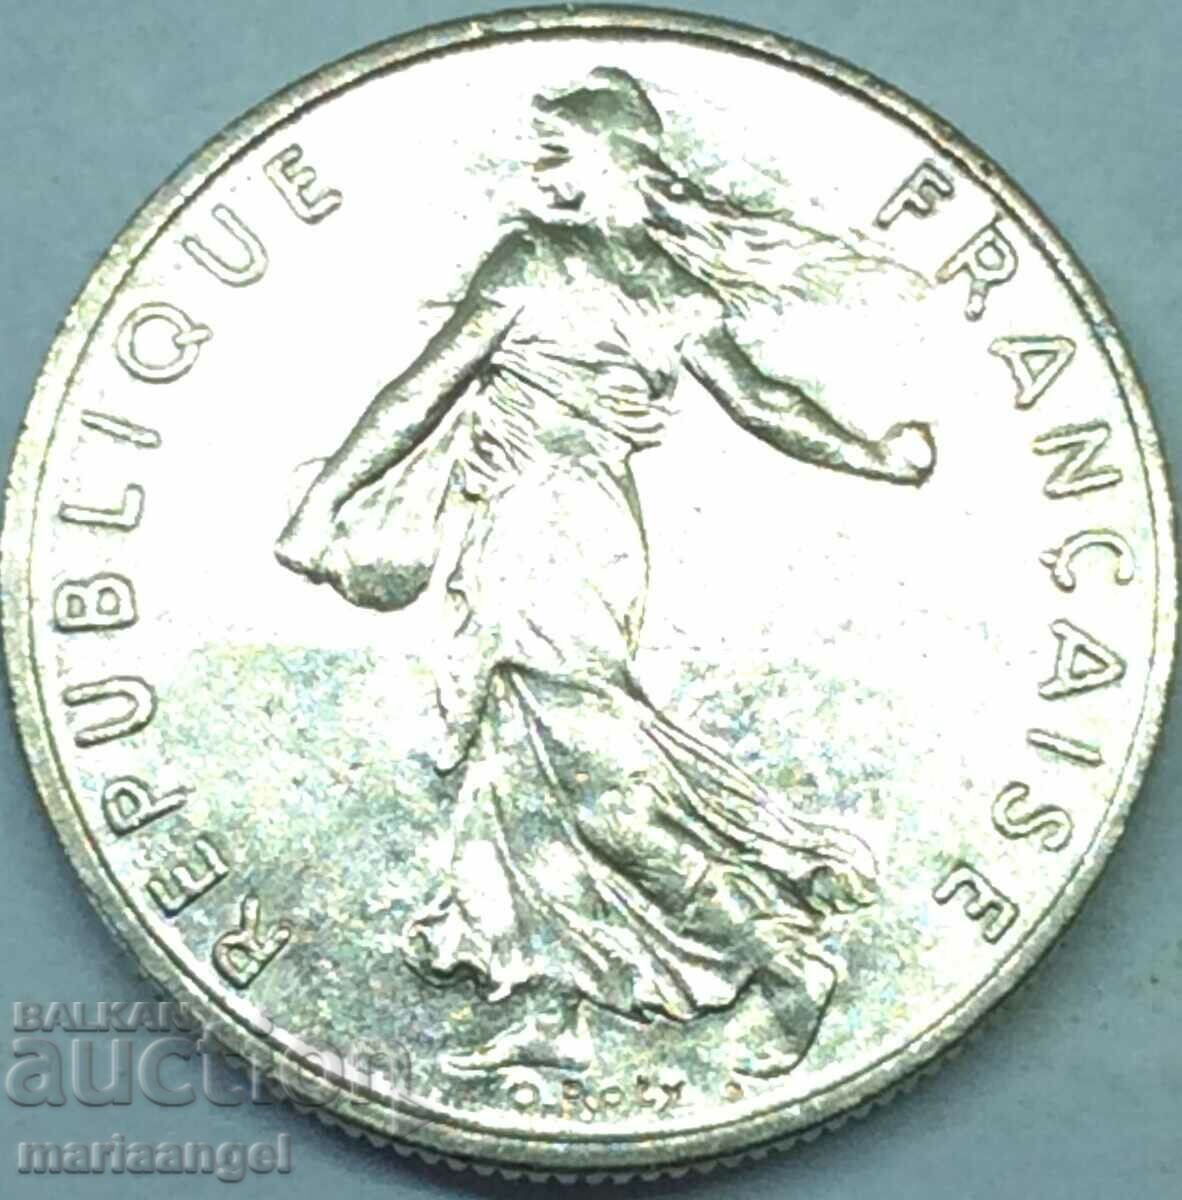 France 1/2 franc 1983